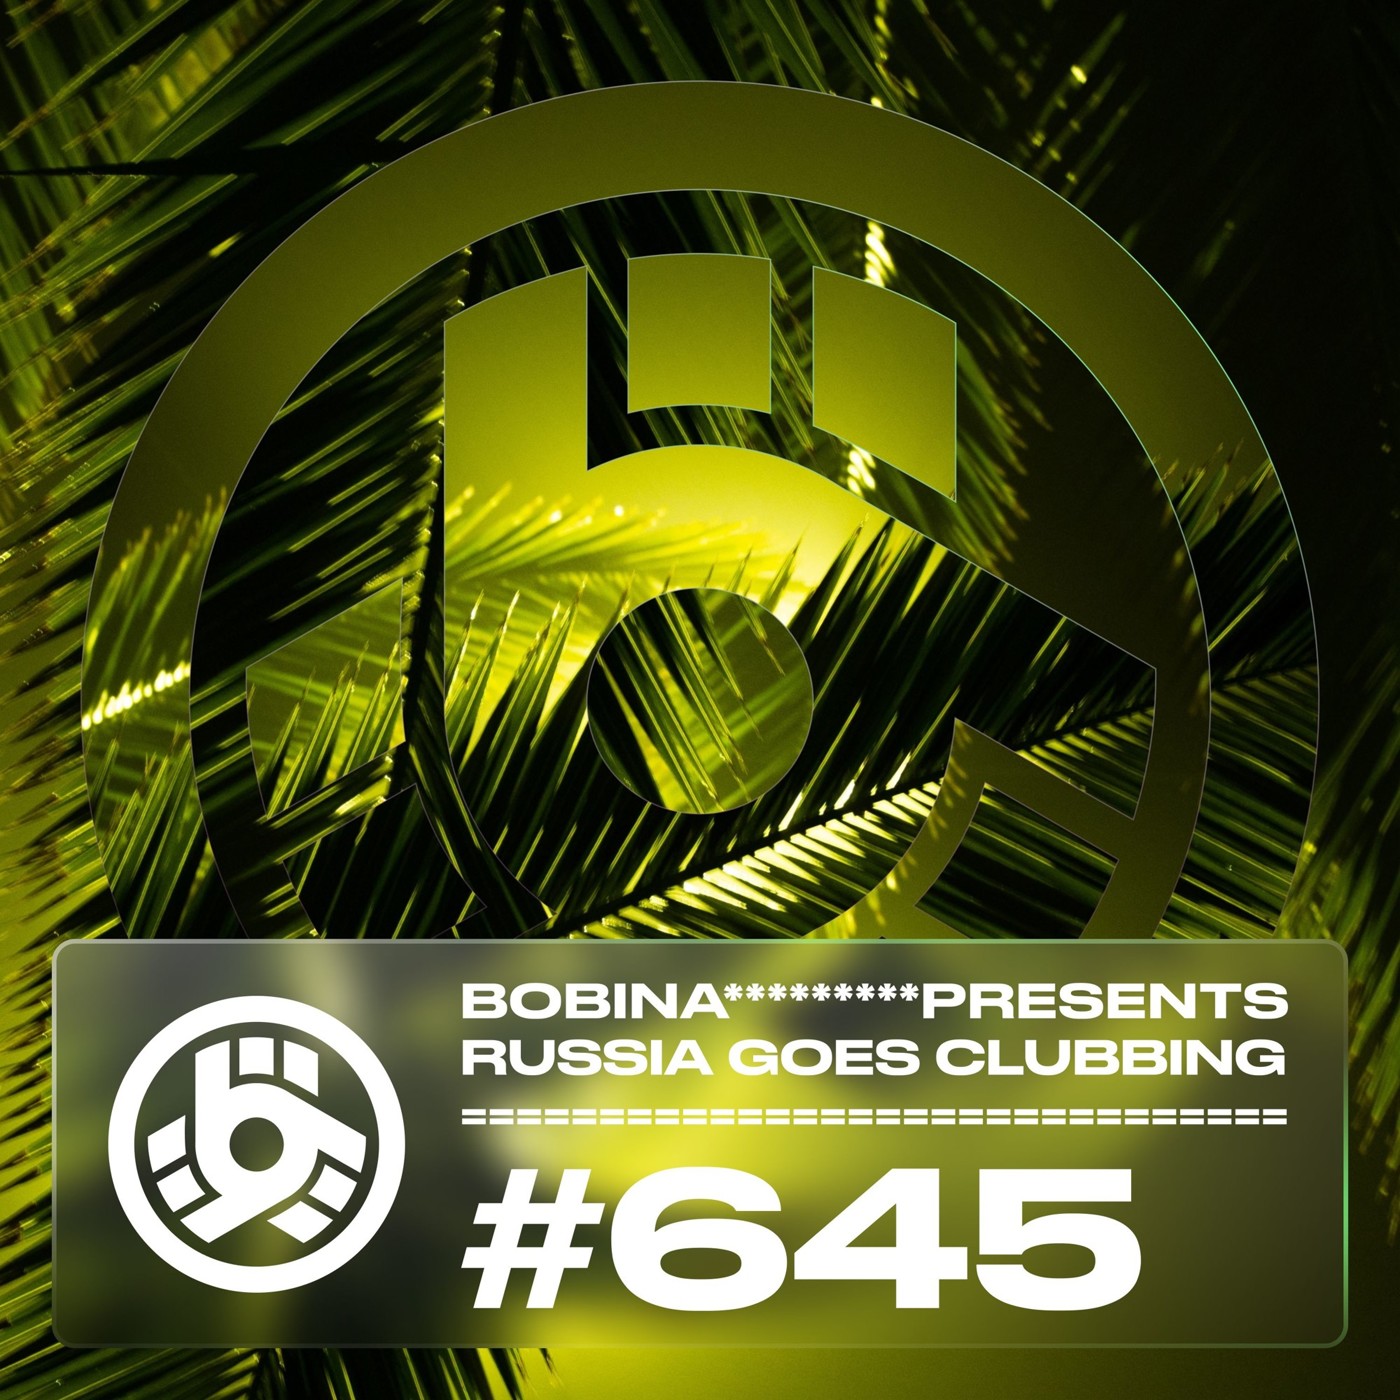 Russia Goes Clubbing #645